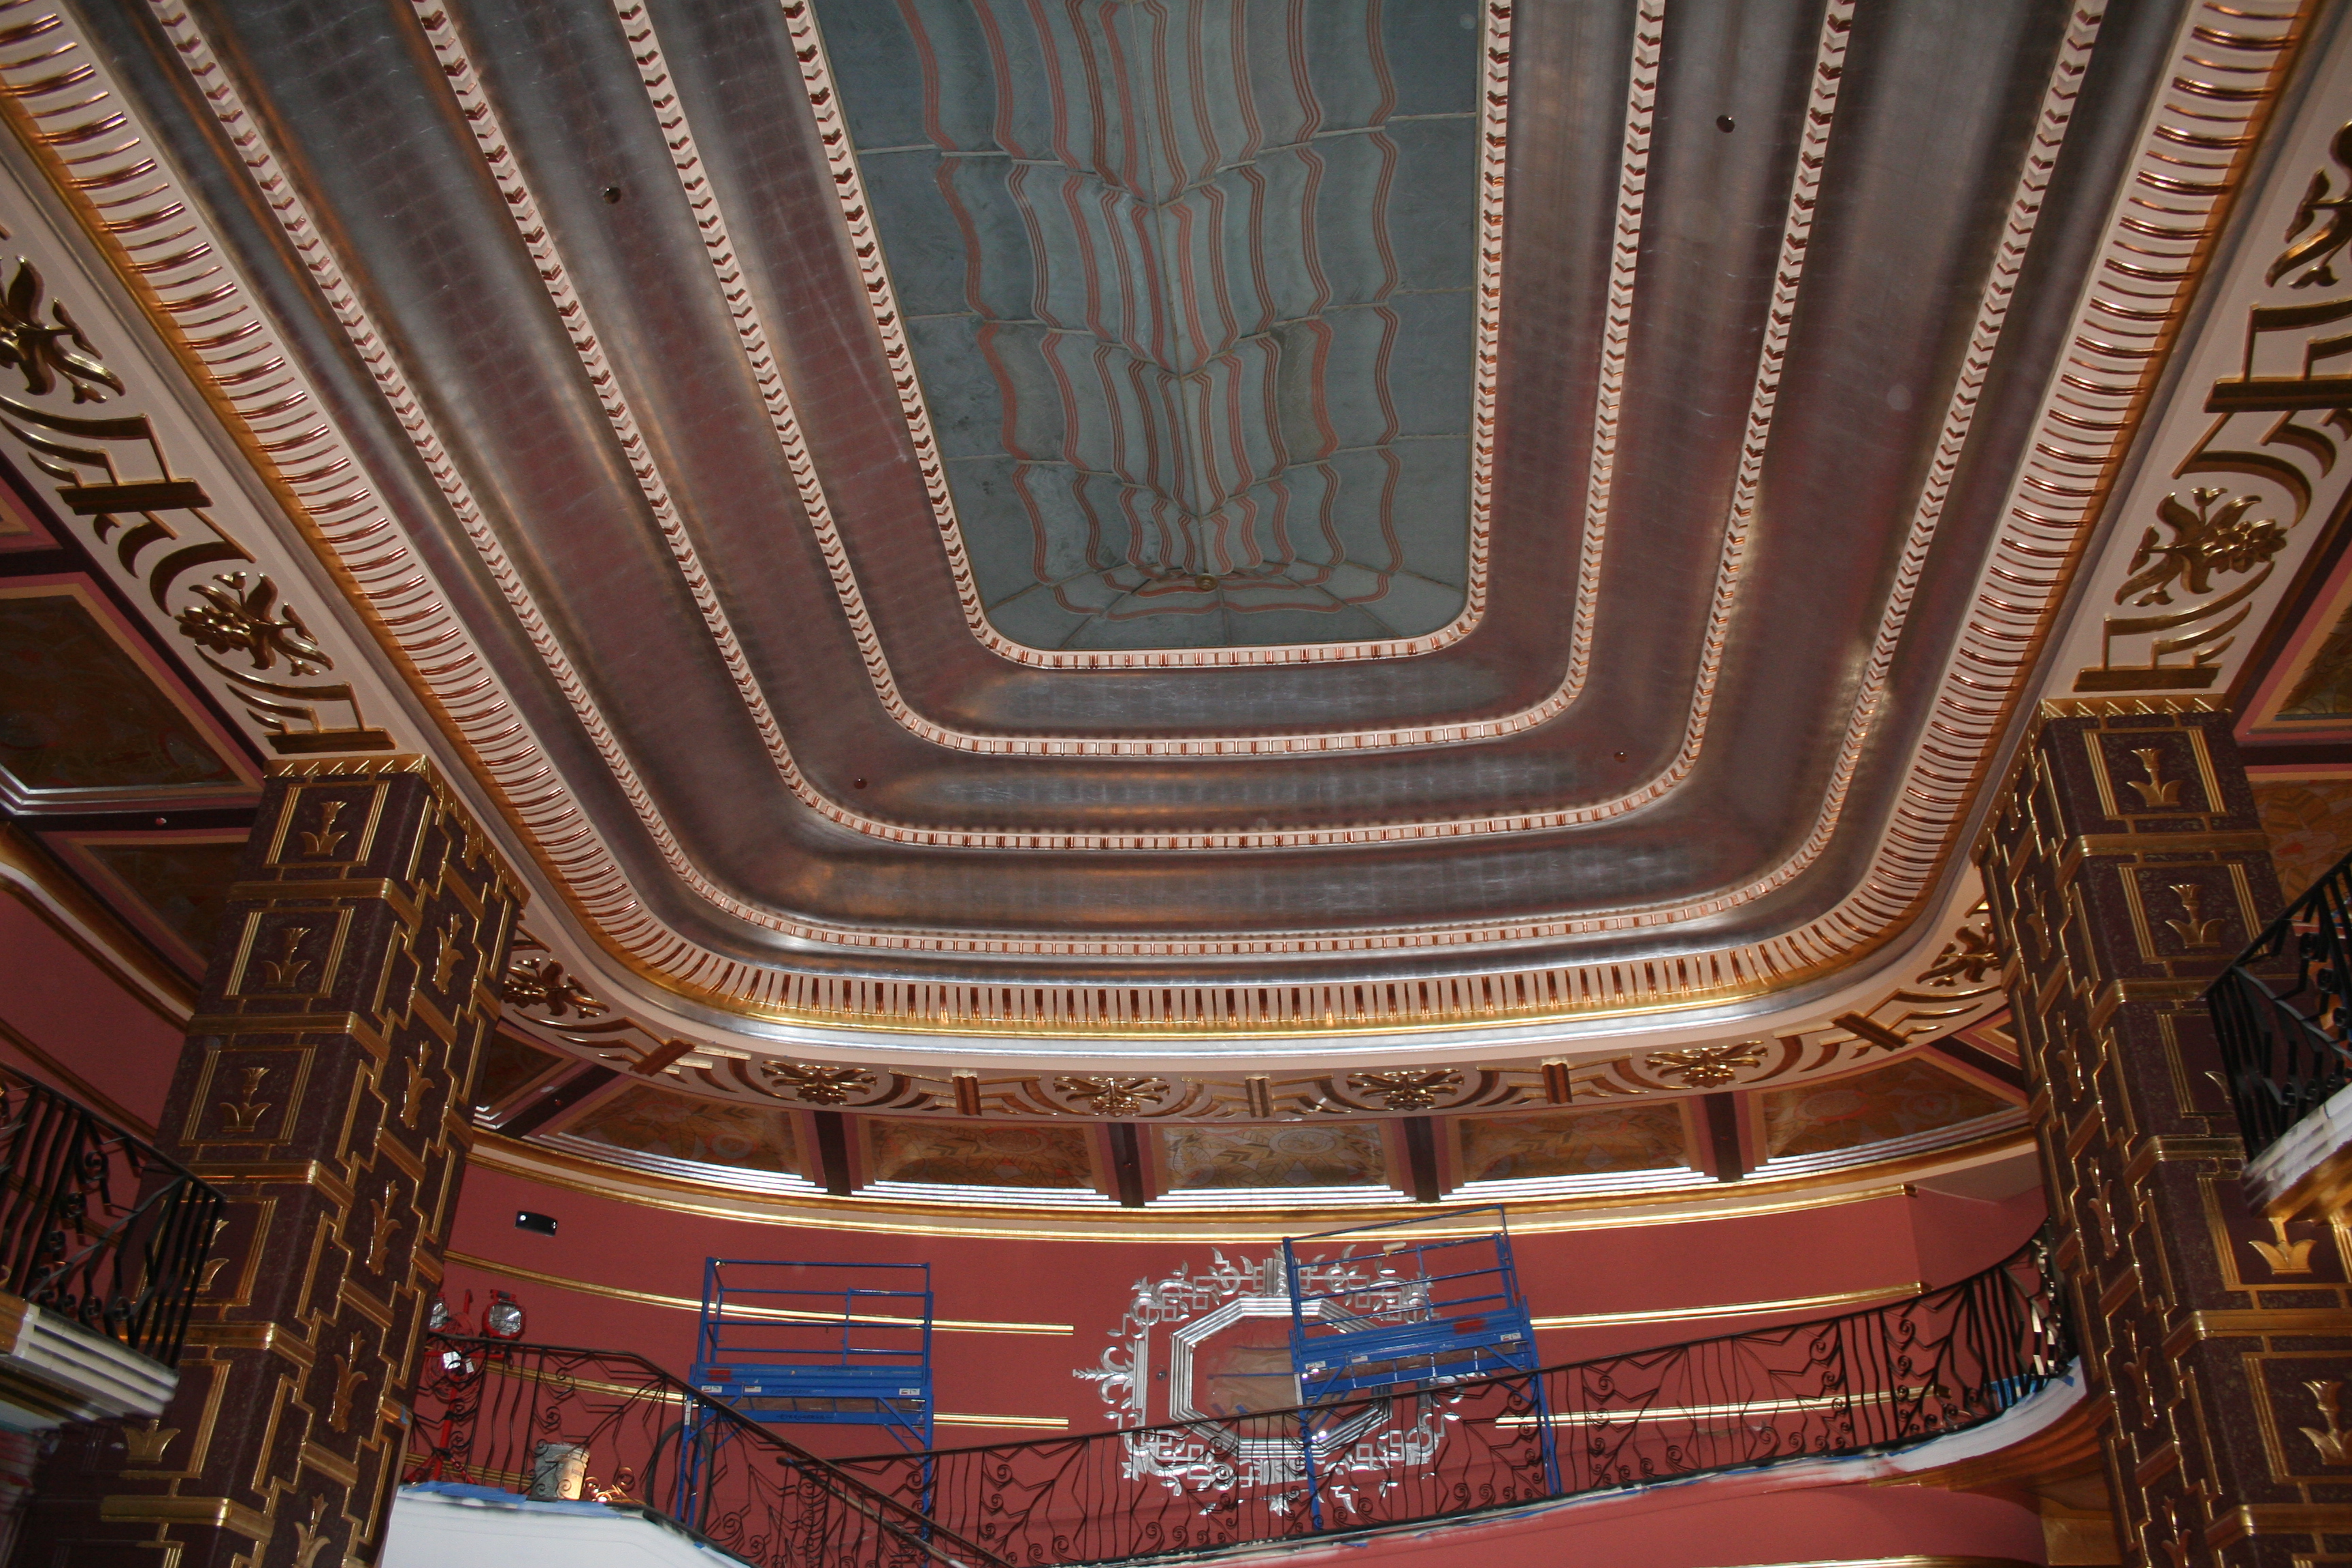 Alameda Theatre & Cineplex